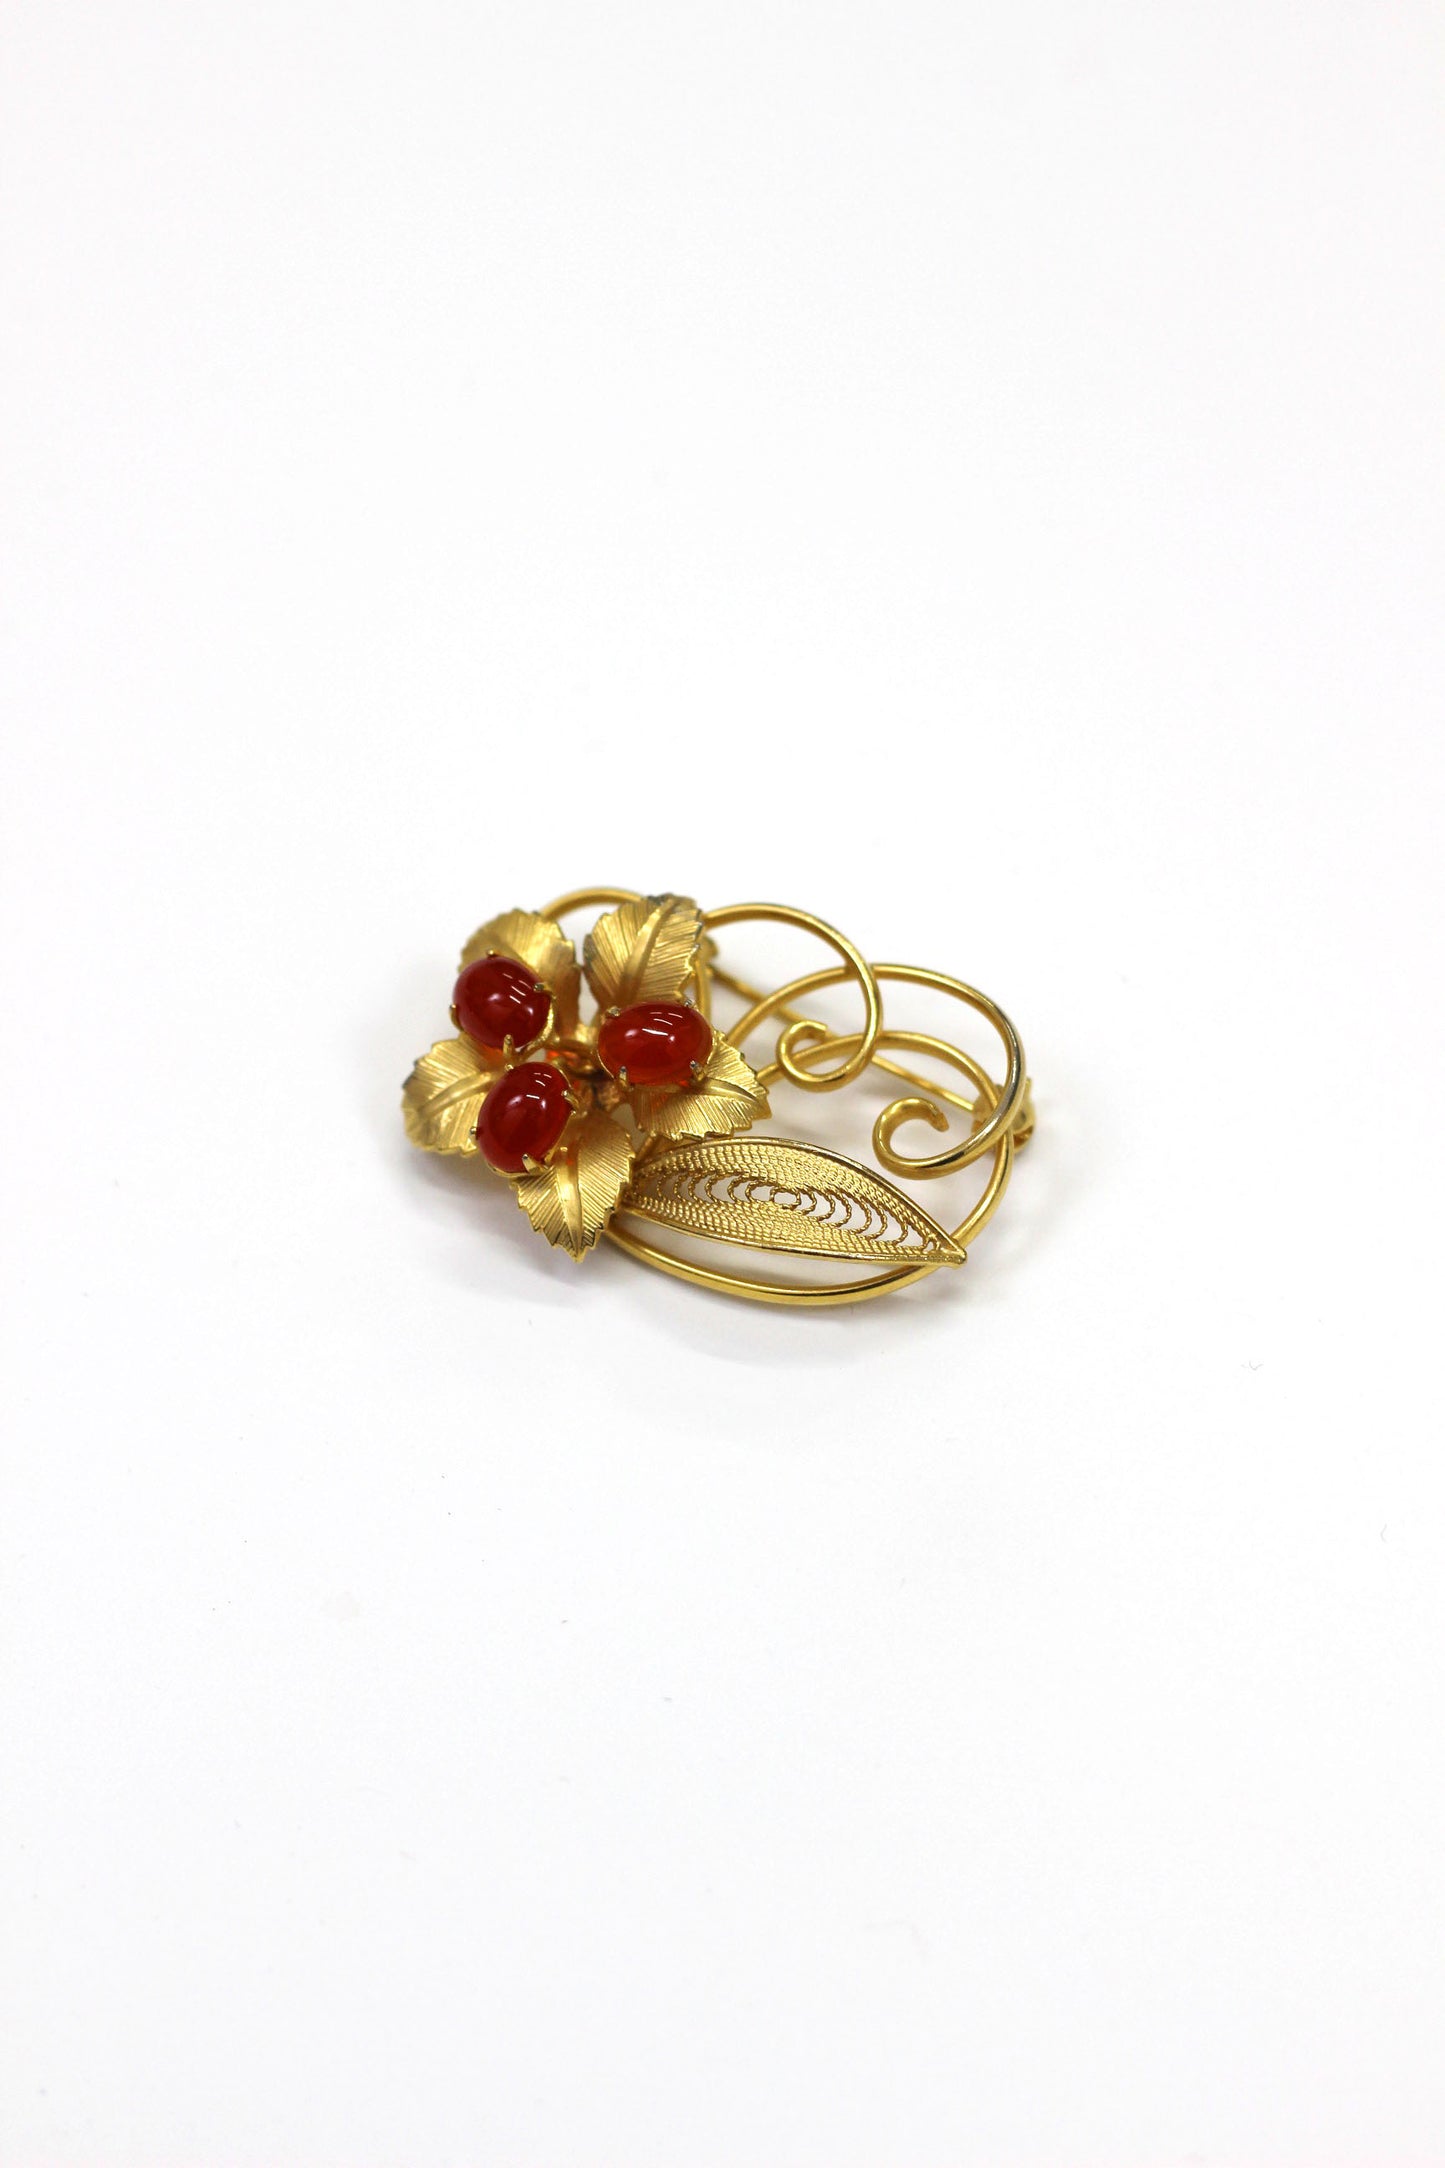 Vintage gold flower brooch 贅沢な輝きで彩る